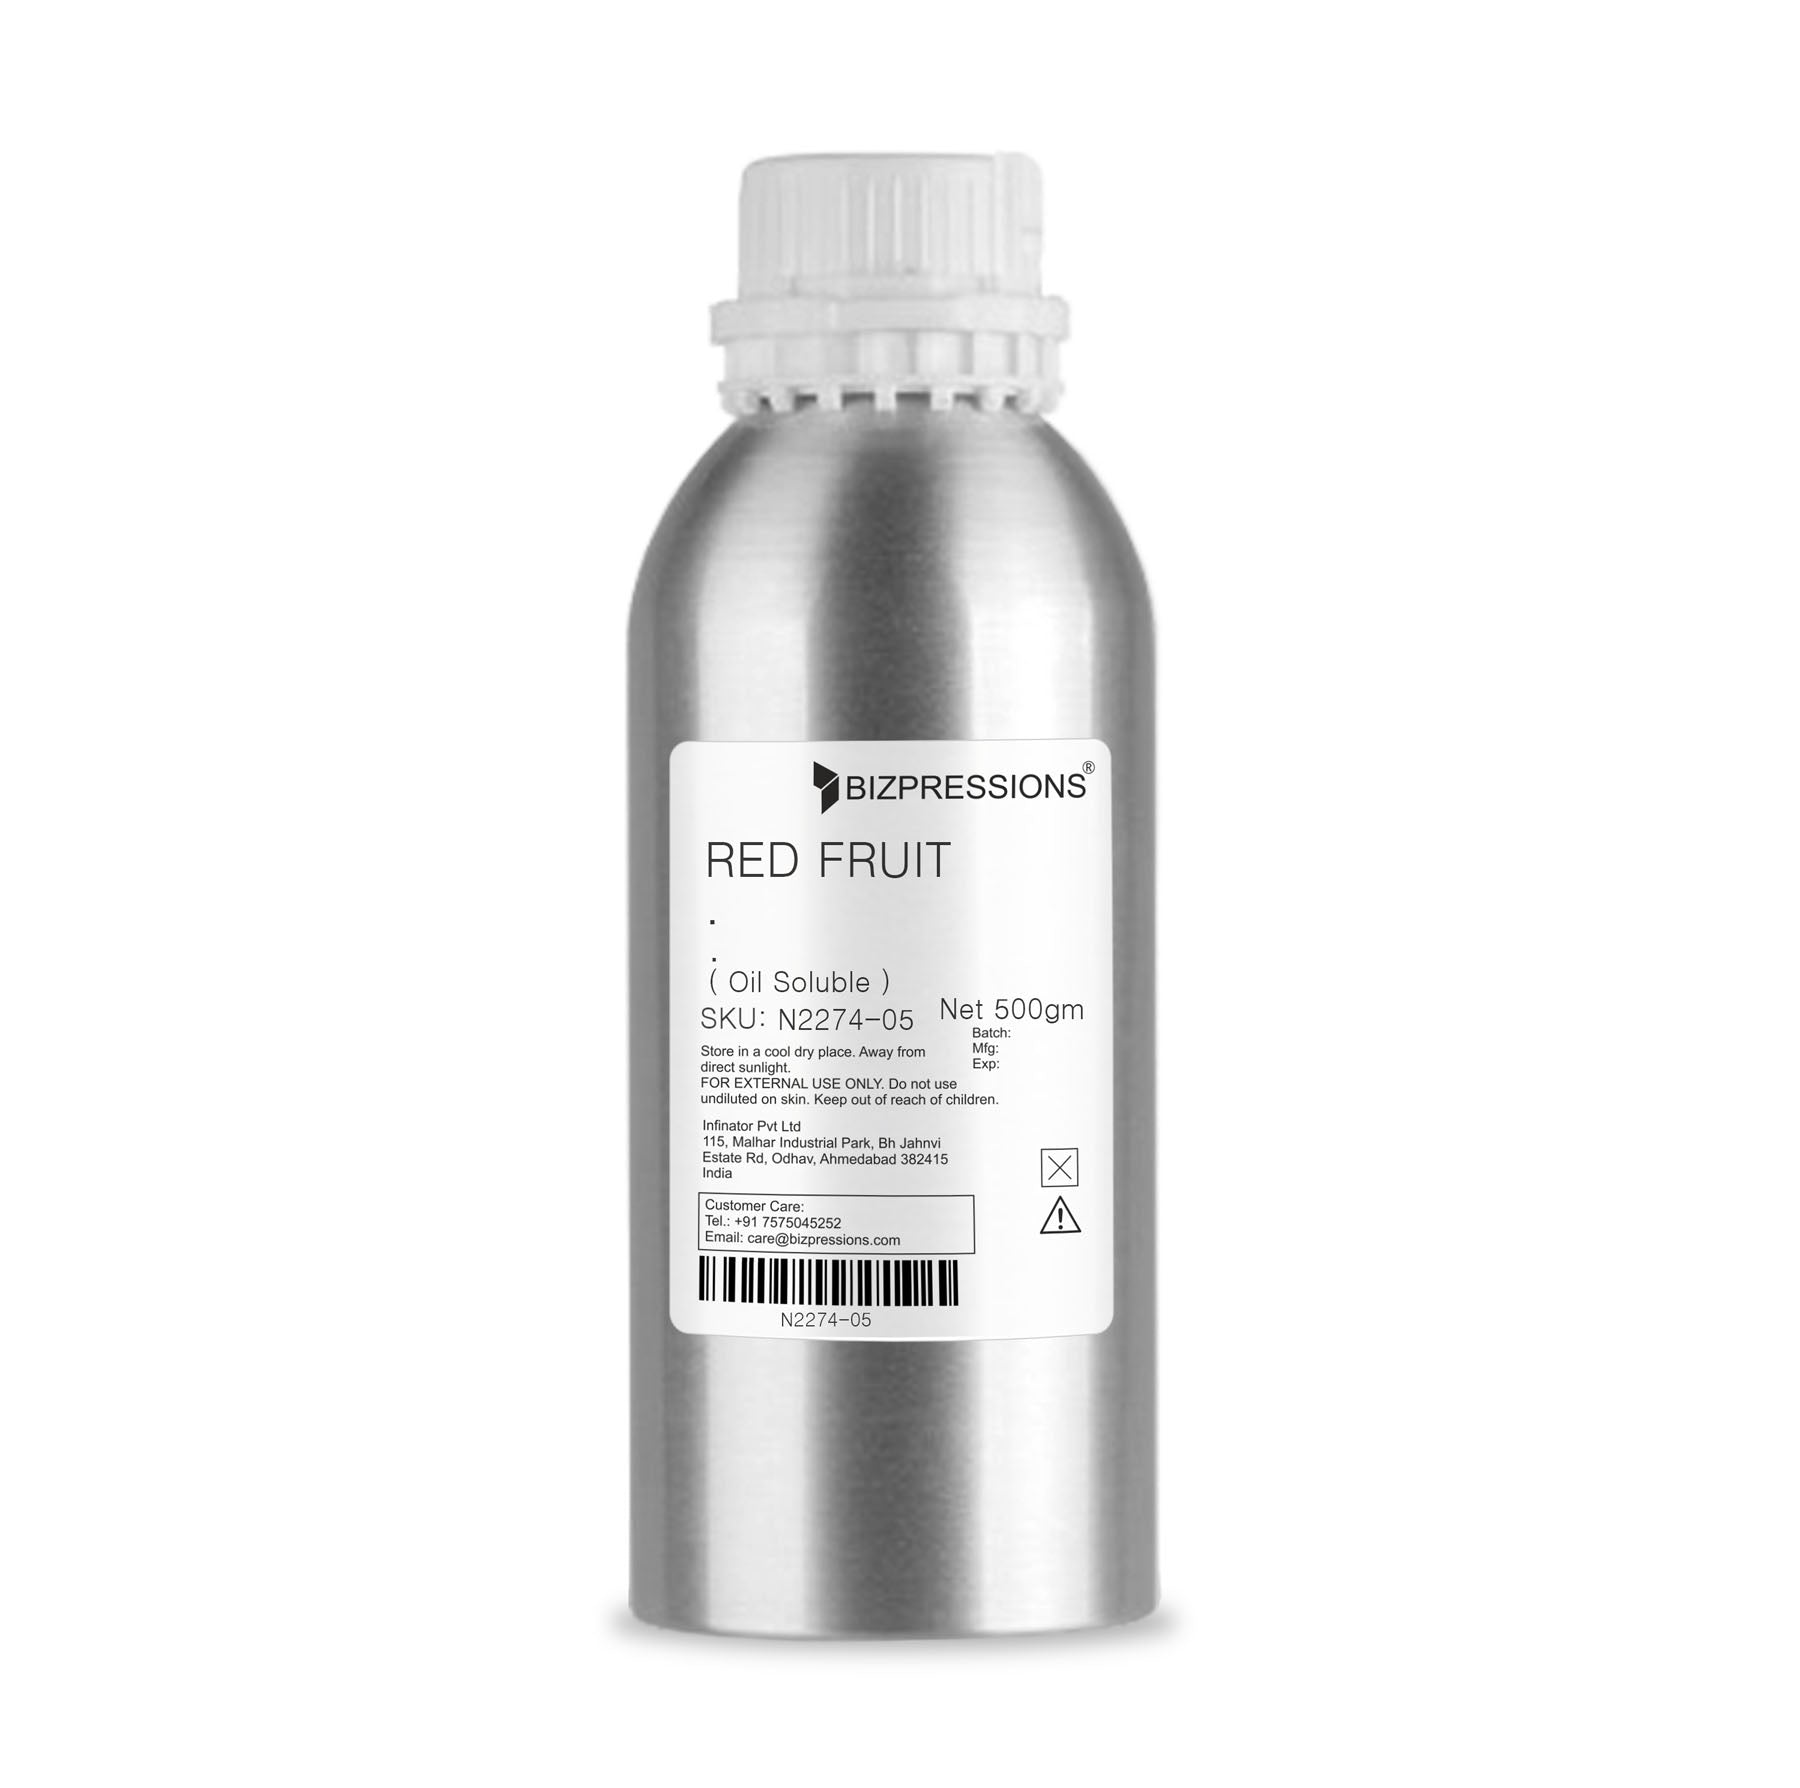 RED FRUIT - Fragrance ( Oil Soluble ) - 500 gm